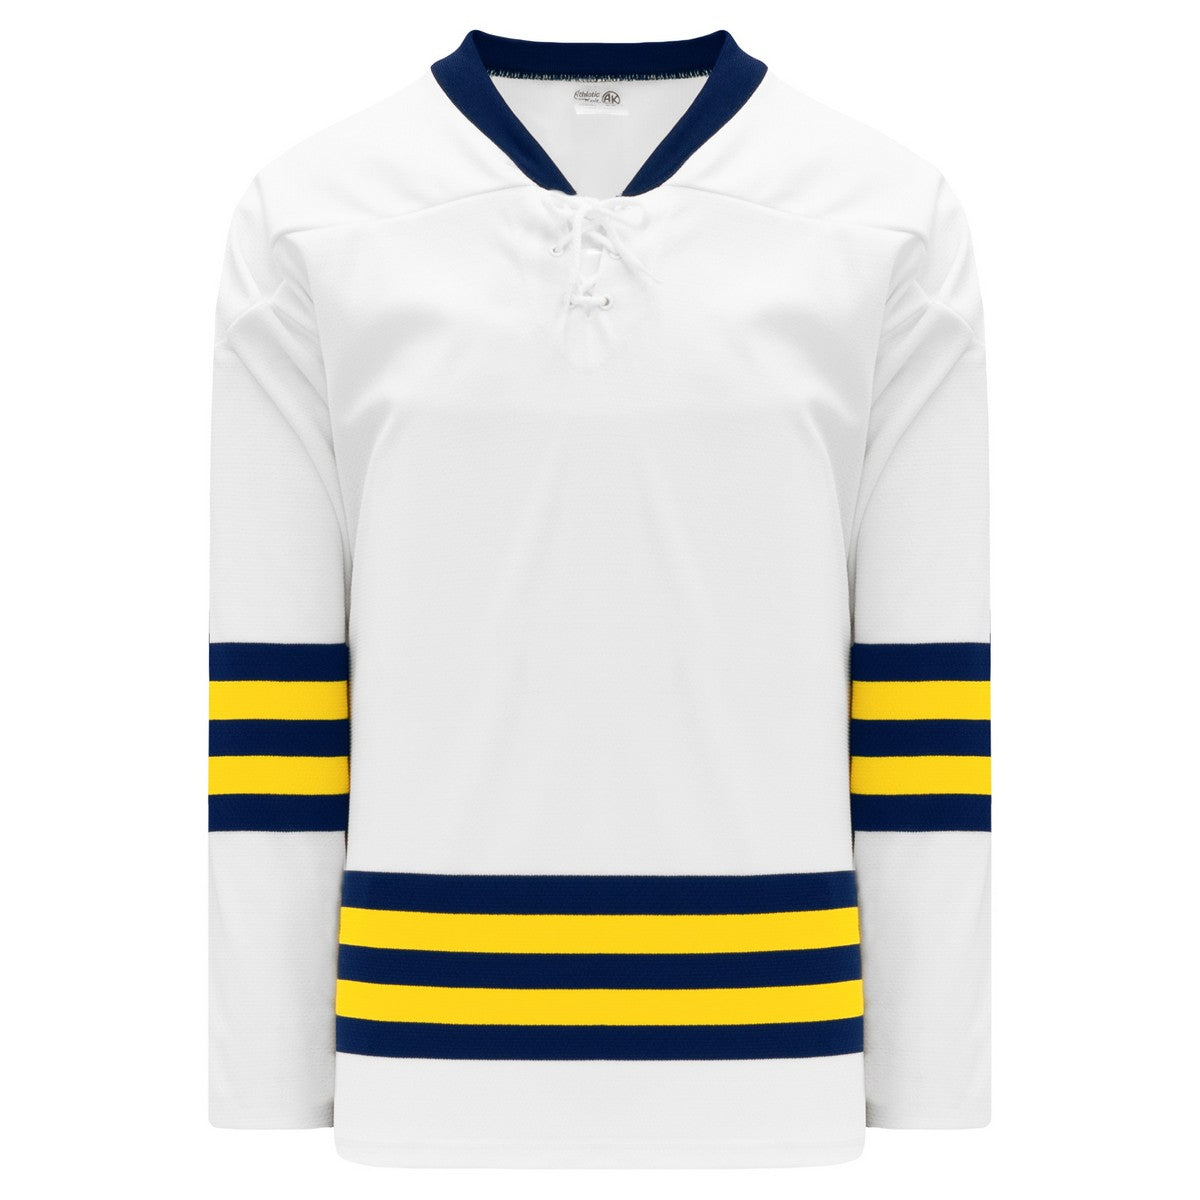 Replica Classic Style Michigan White Hockey Jersey